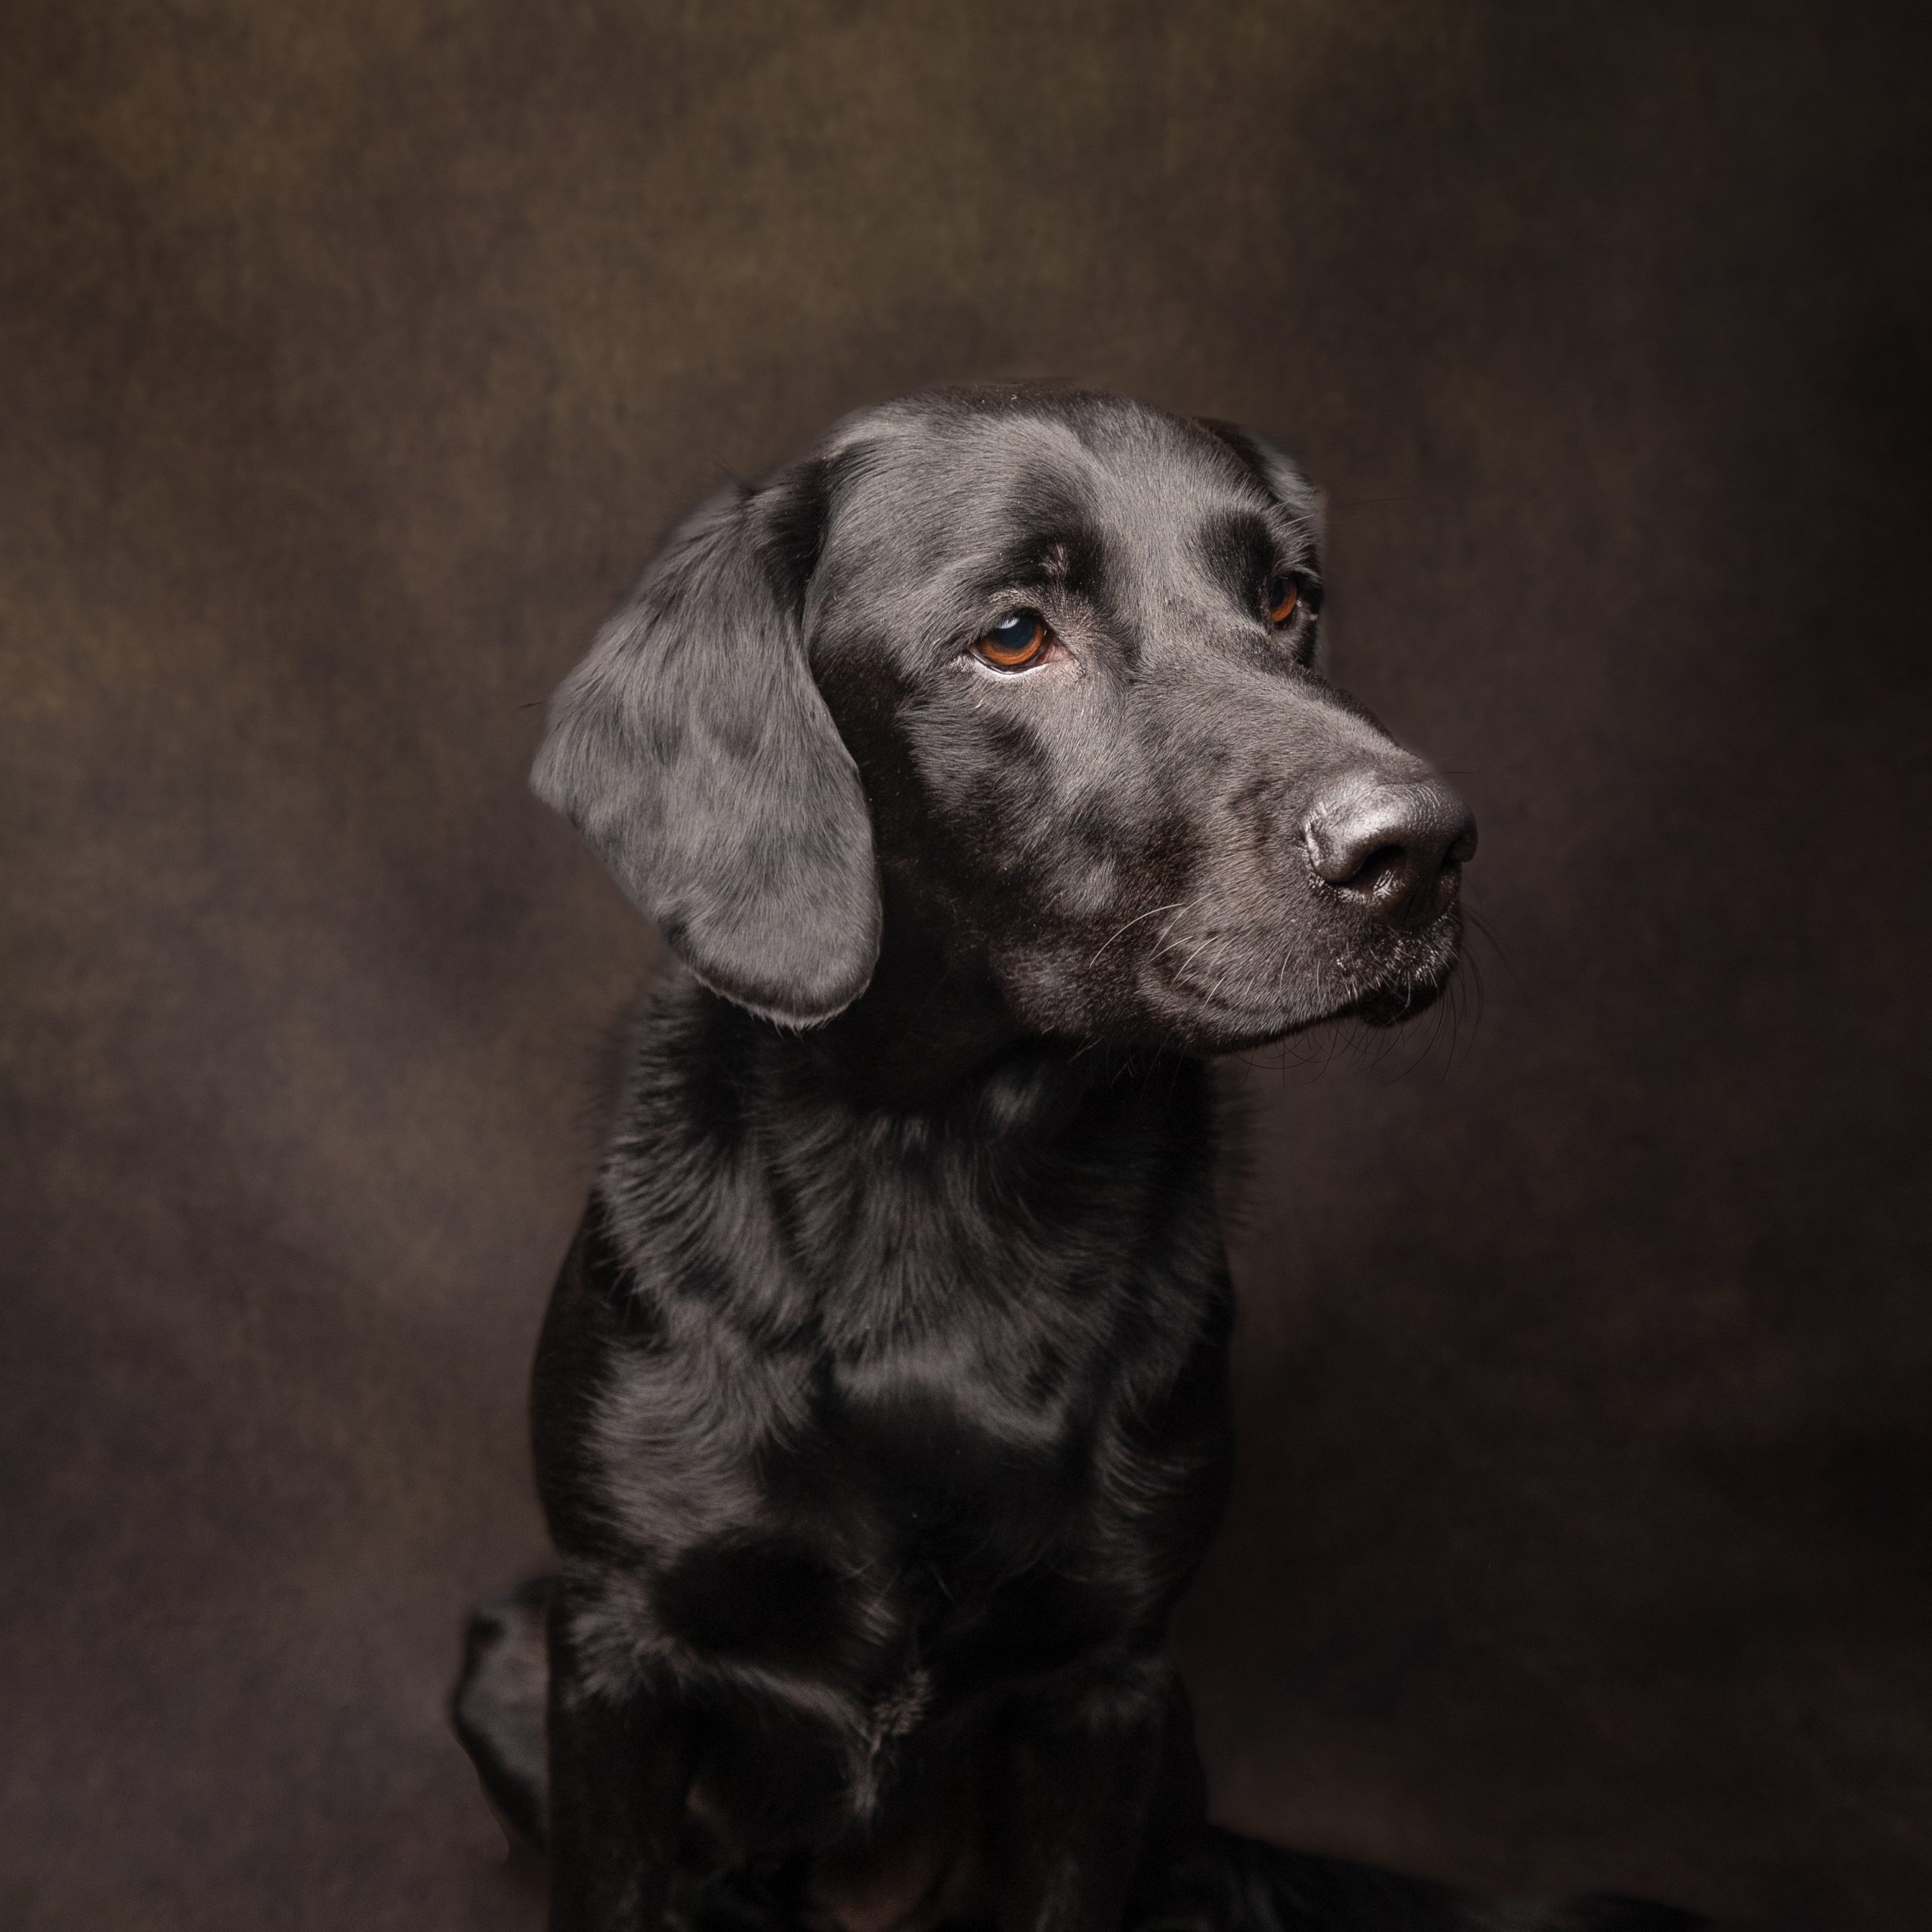 Barney the black Labrador staring off camera, against a dark background